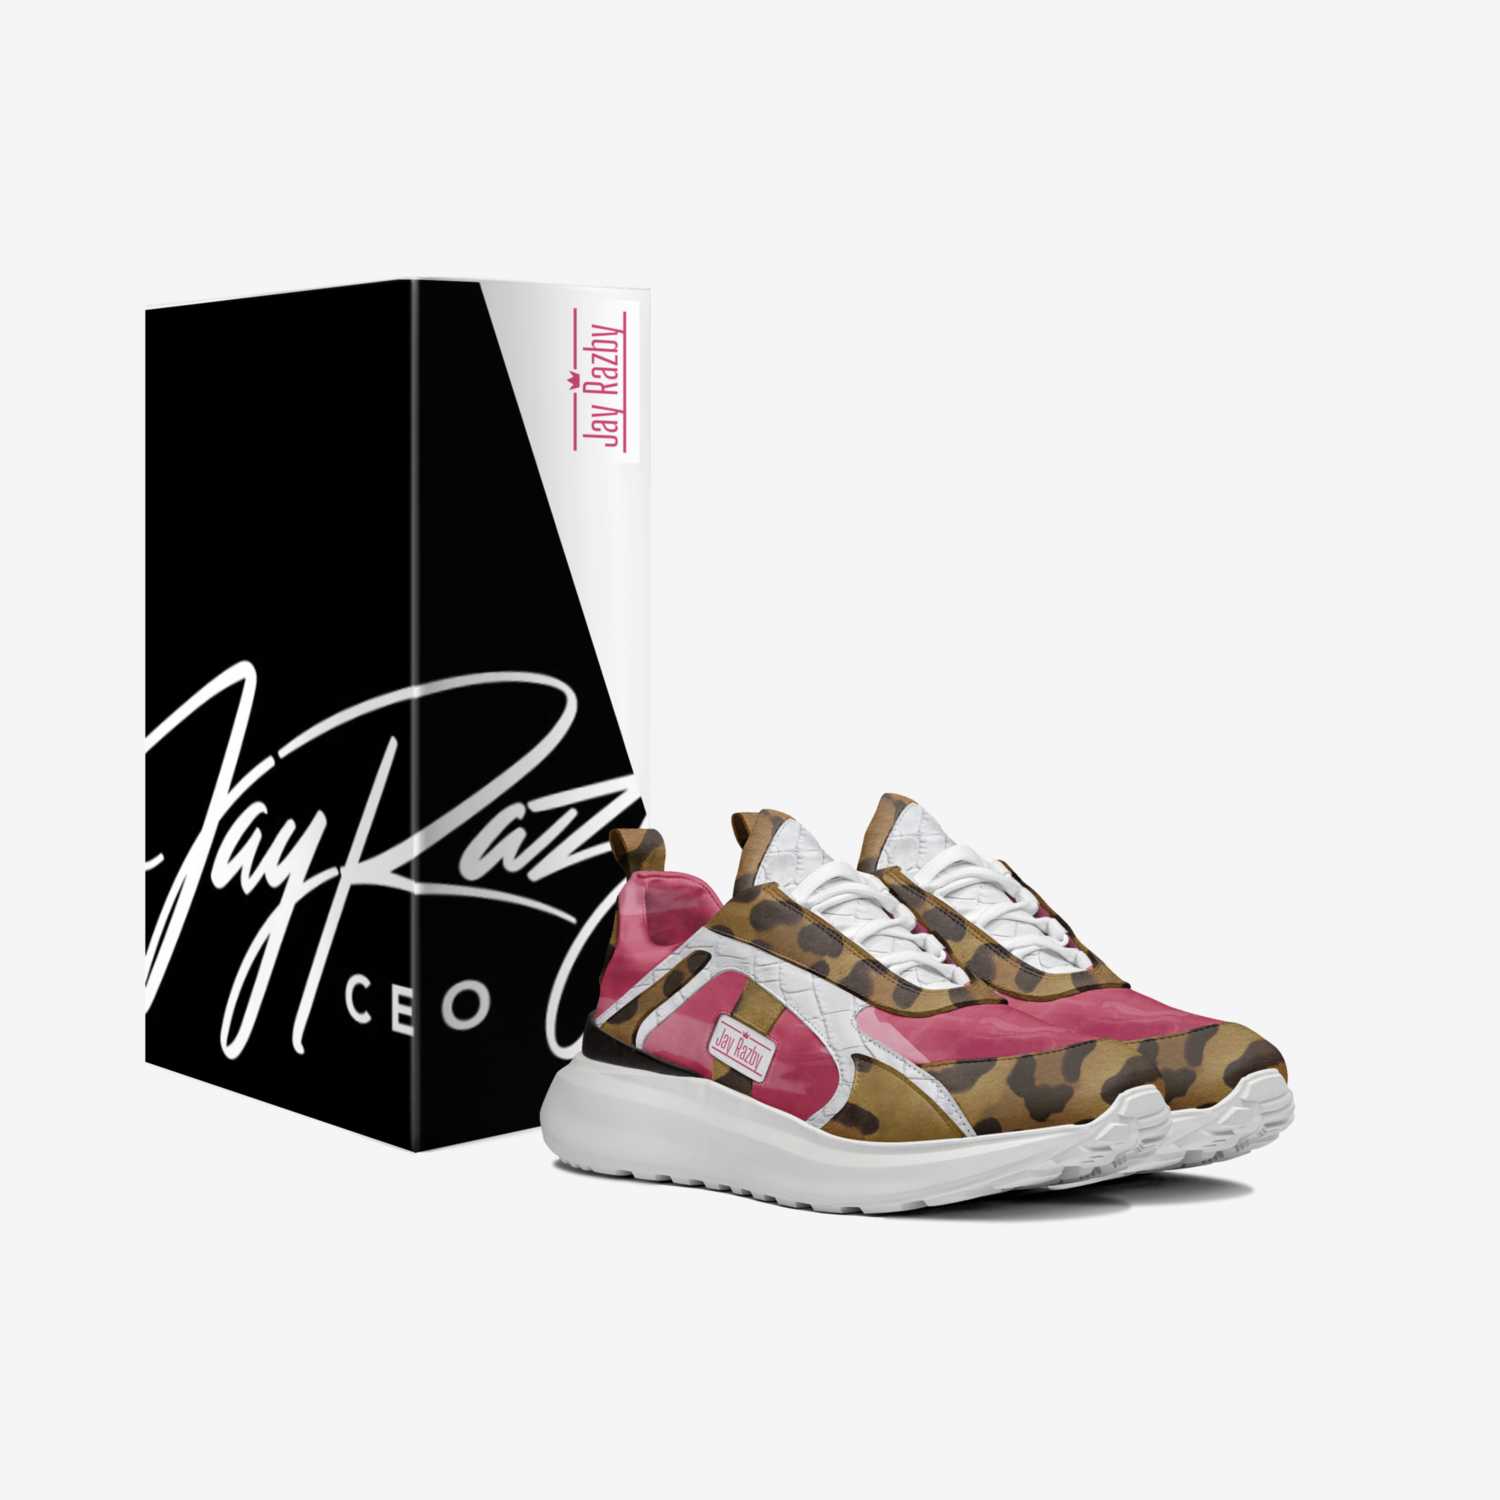 Jay Razby  custom made in Italy shoes by Jay Rock | Box view